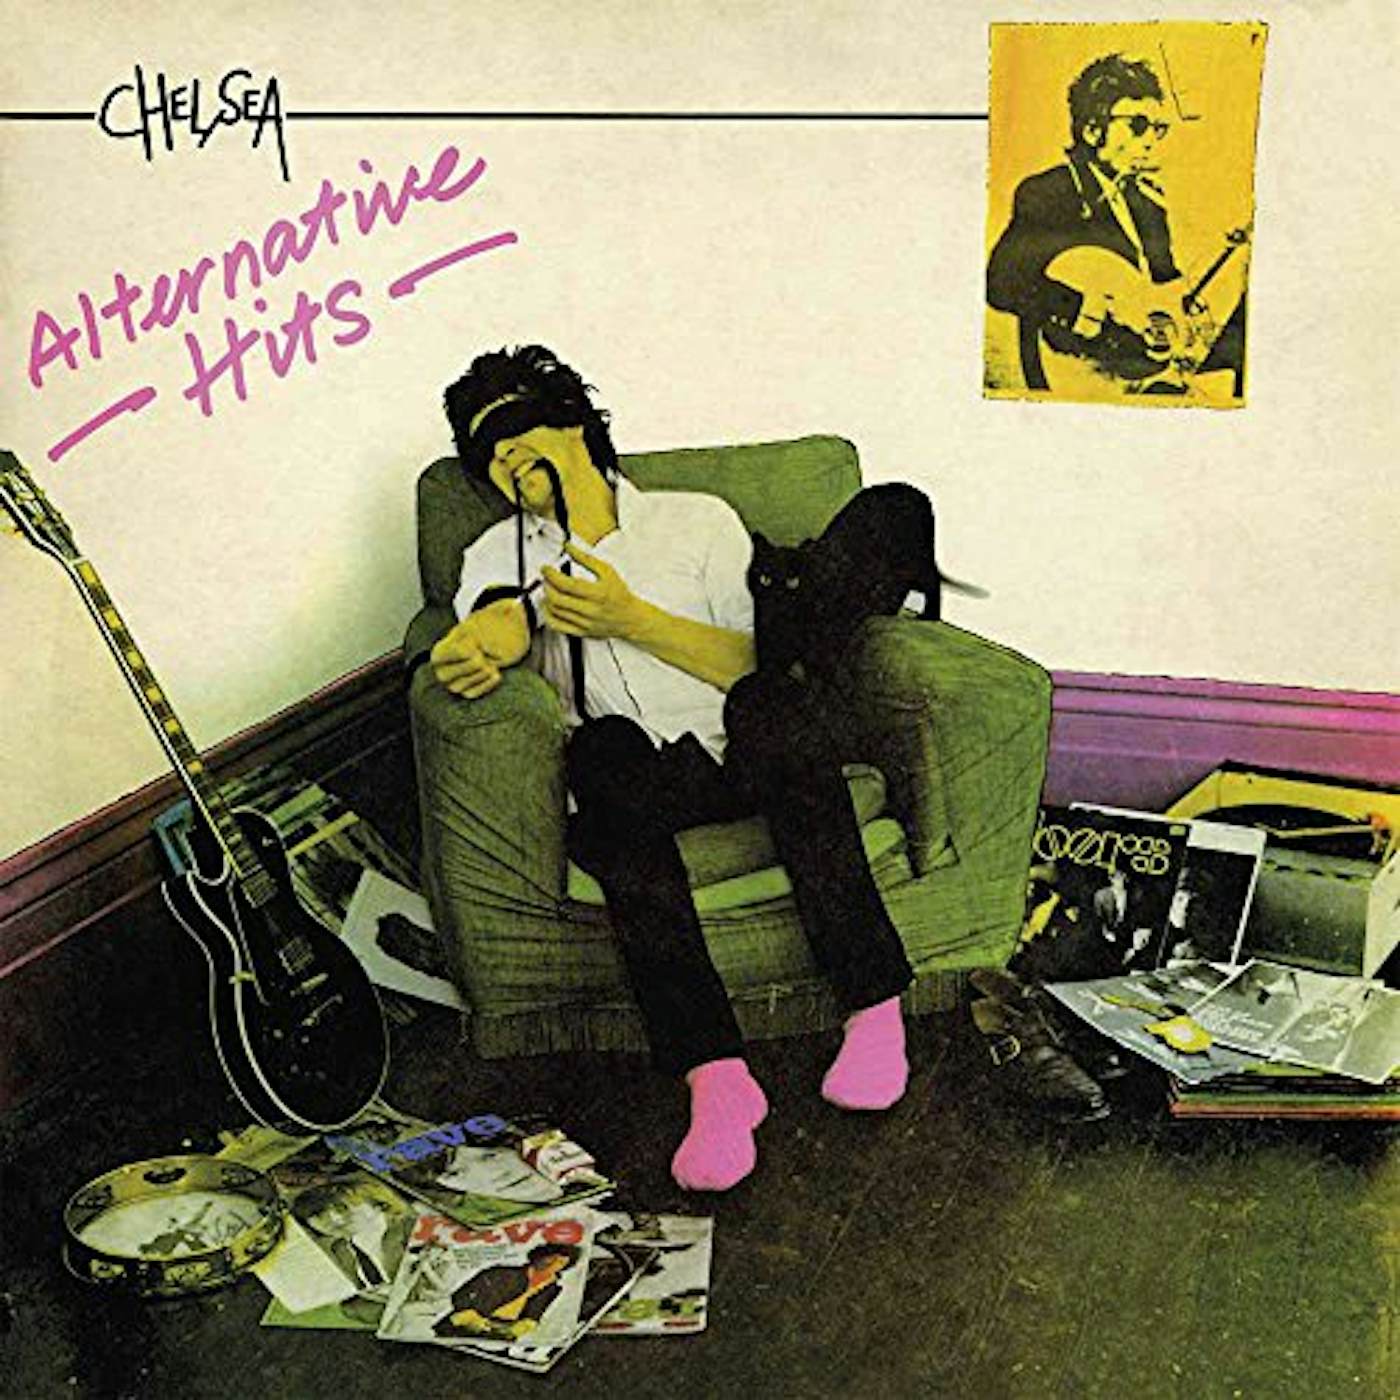 Chelsea Alternative Hits Vinyl Record